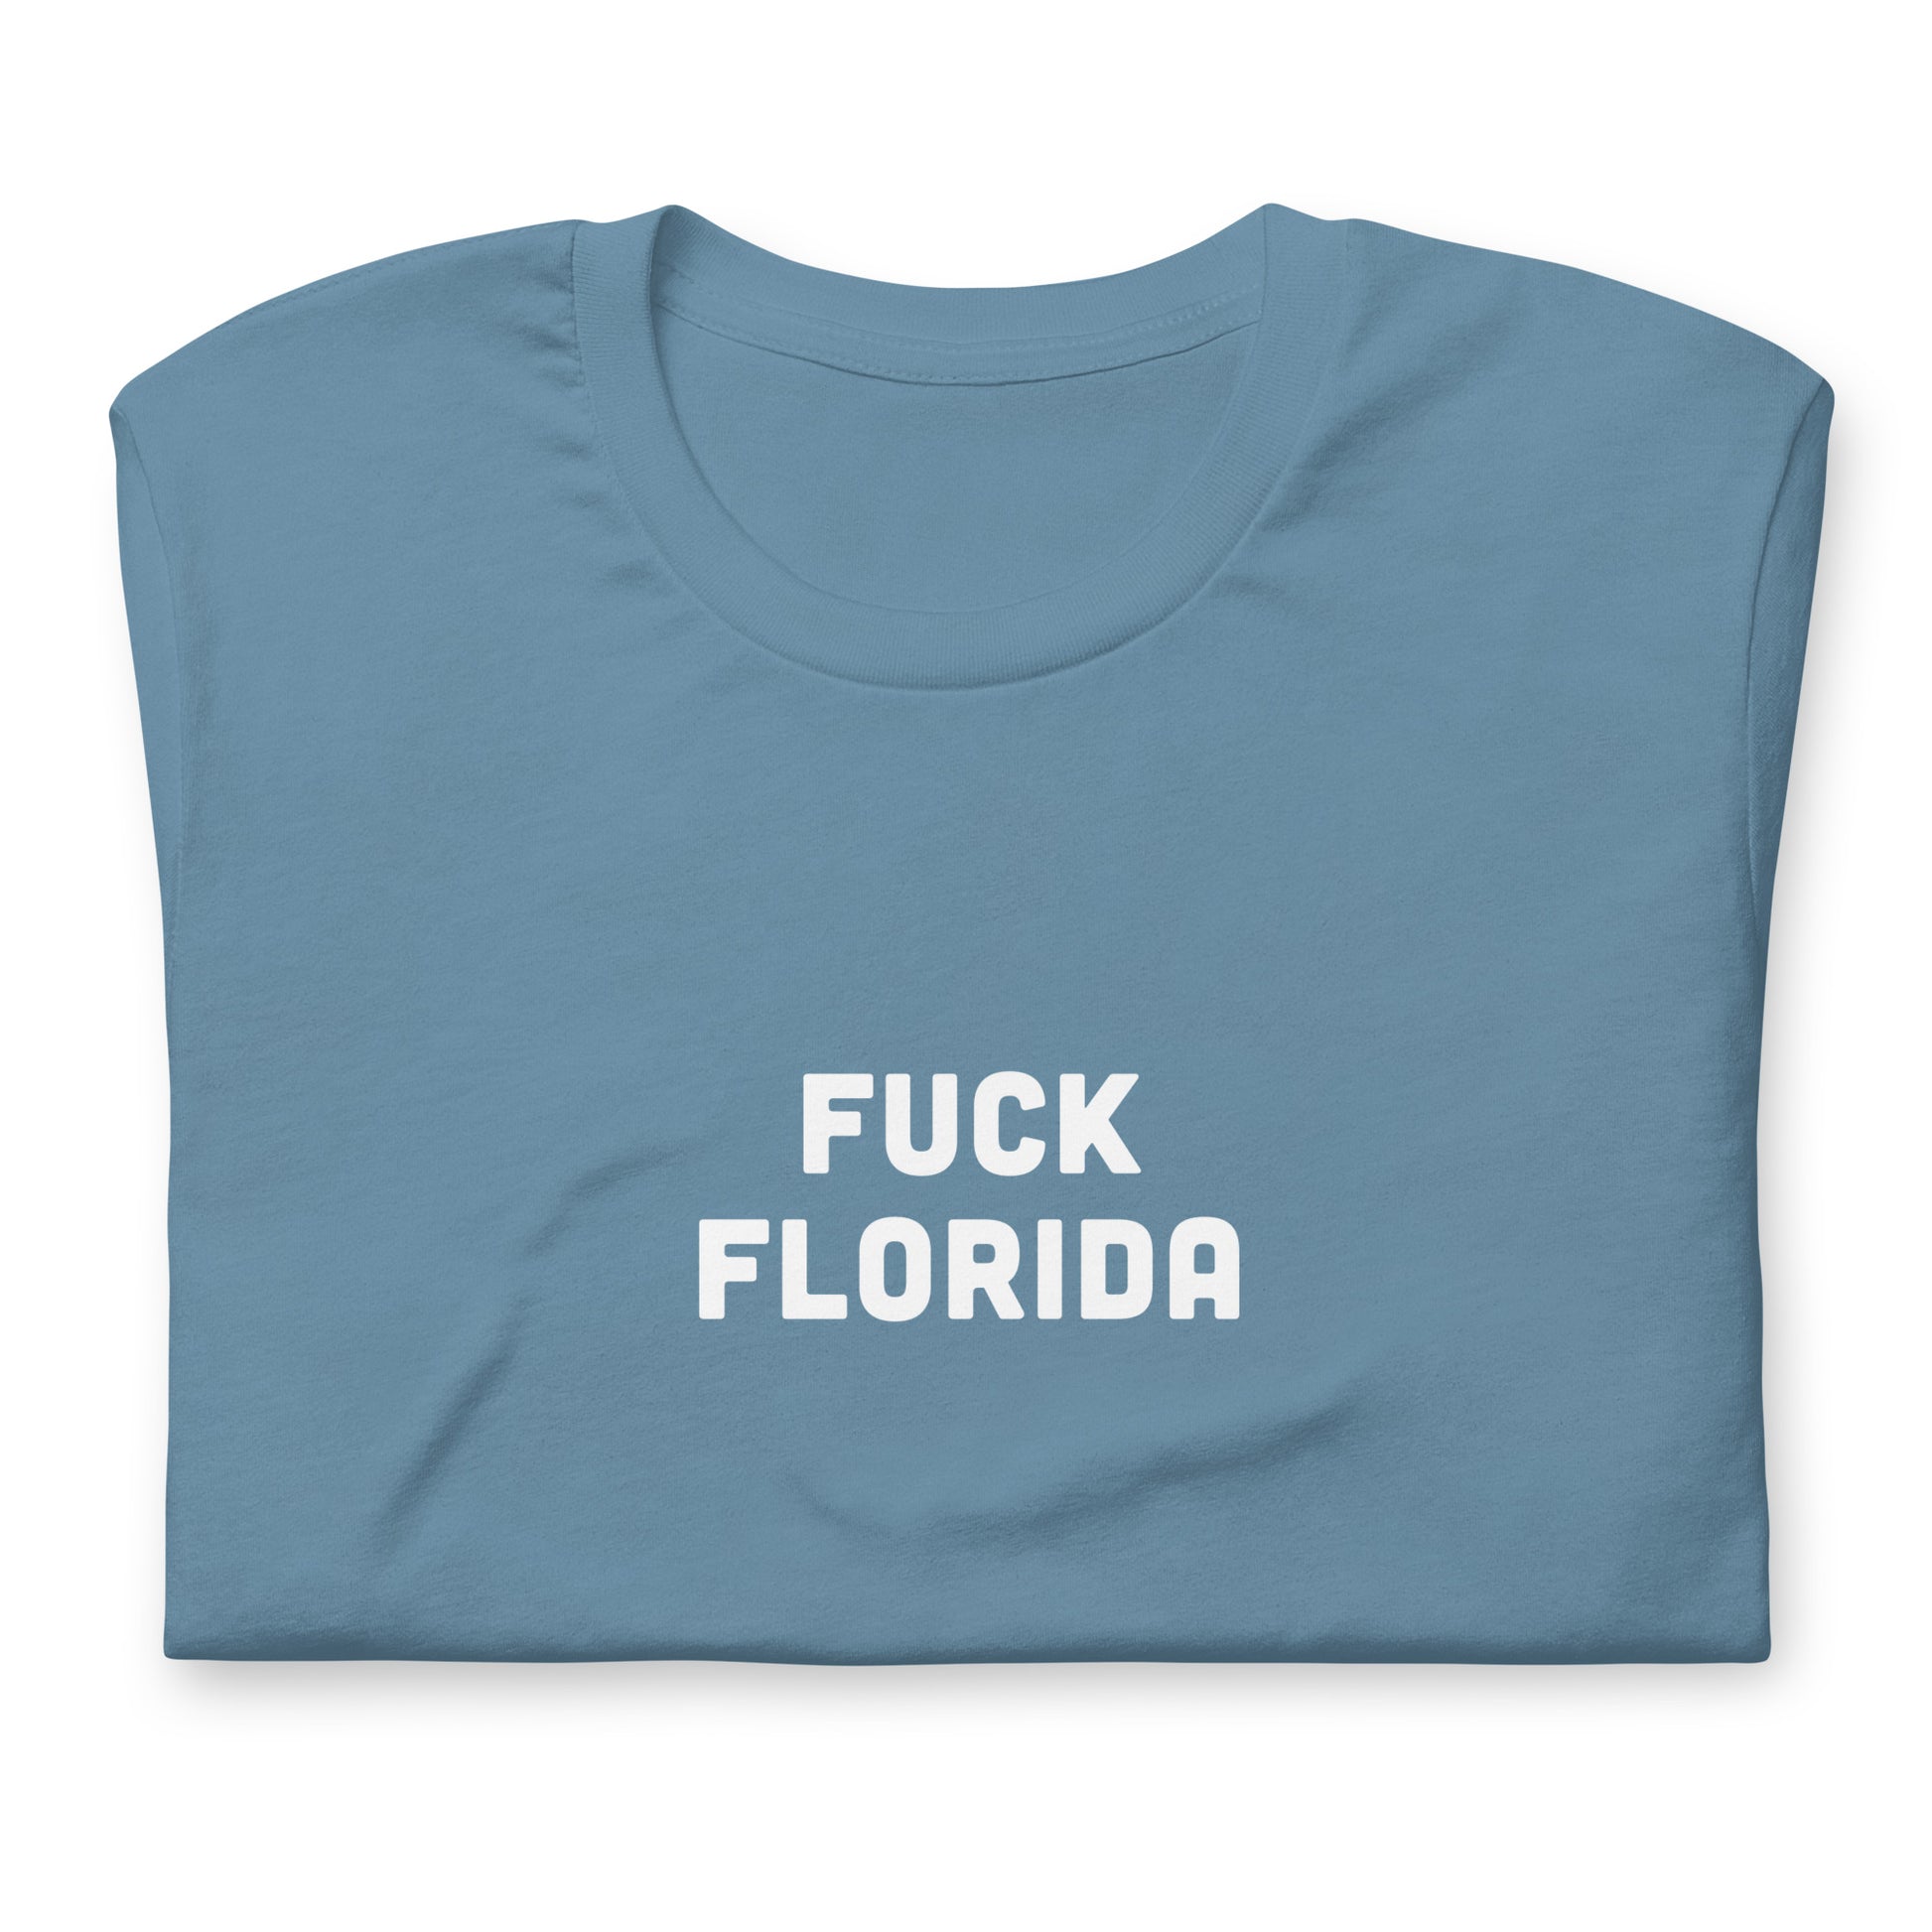 Fuck Florida T-Shirt Size M Color Forest